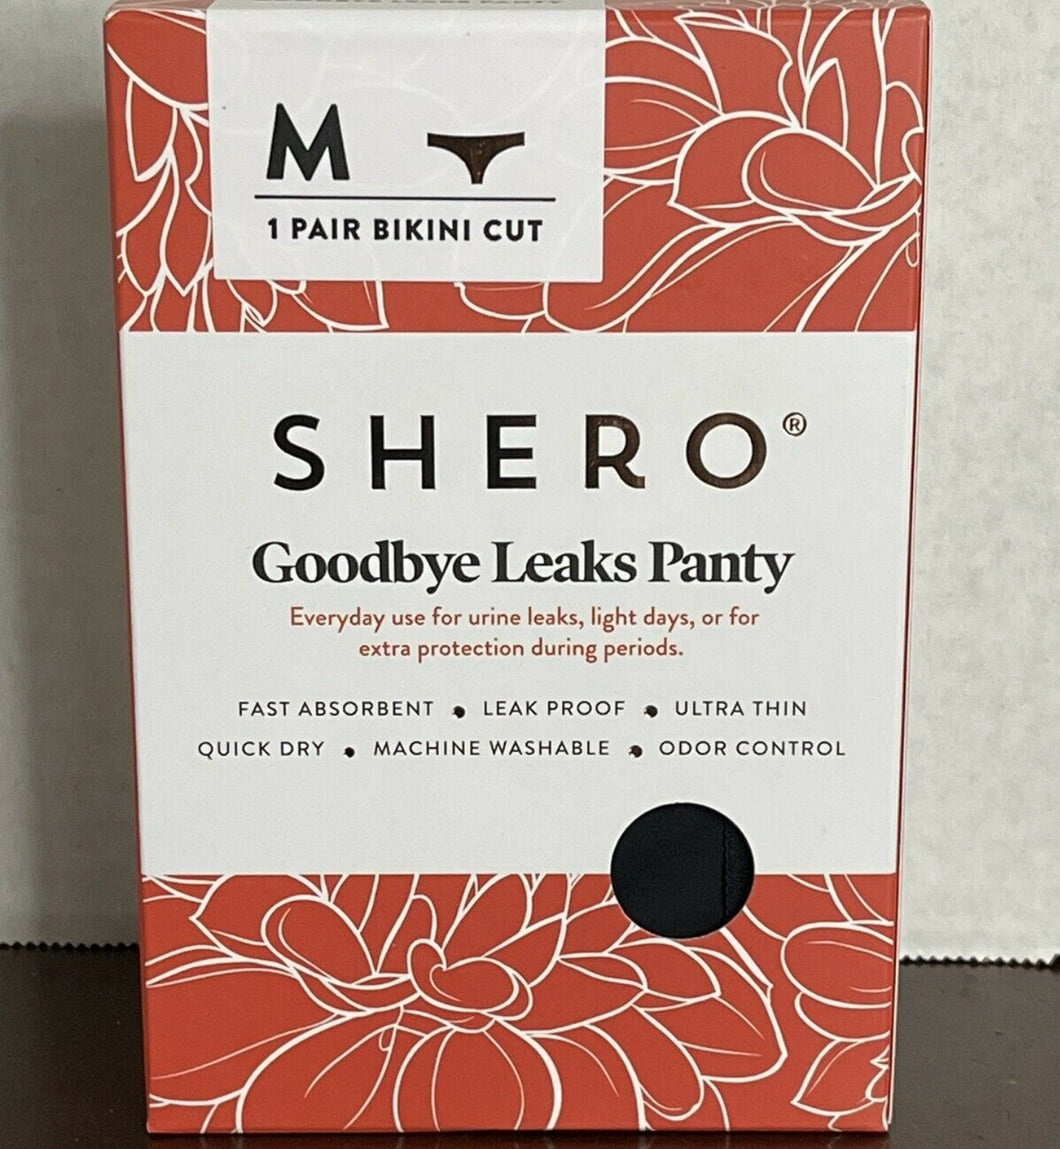 Shero Goodbye Leaks Panty